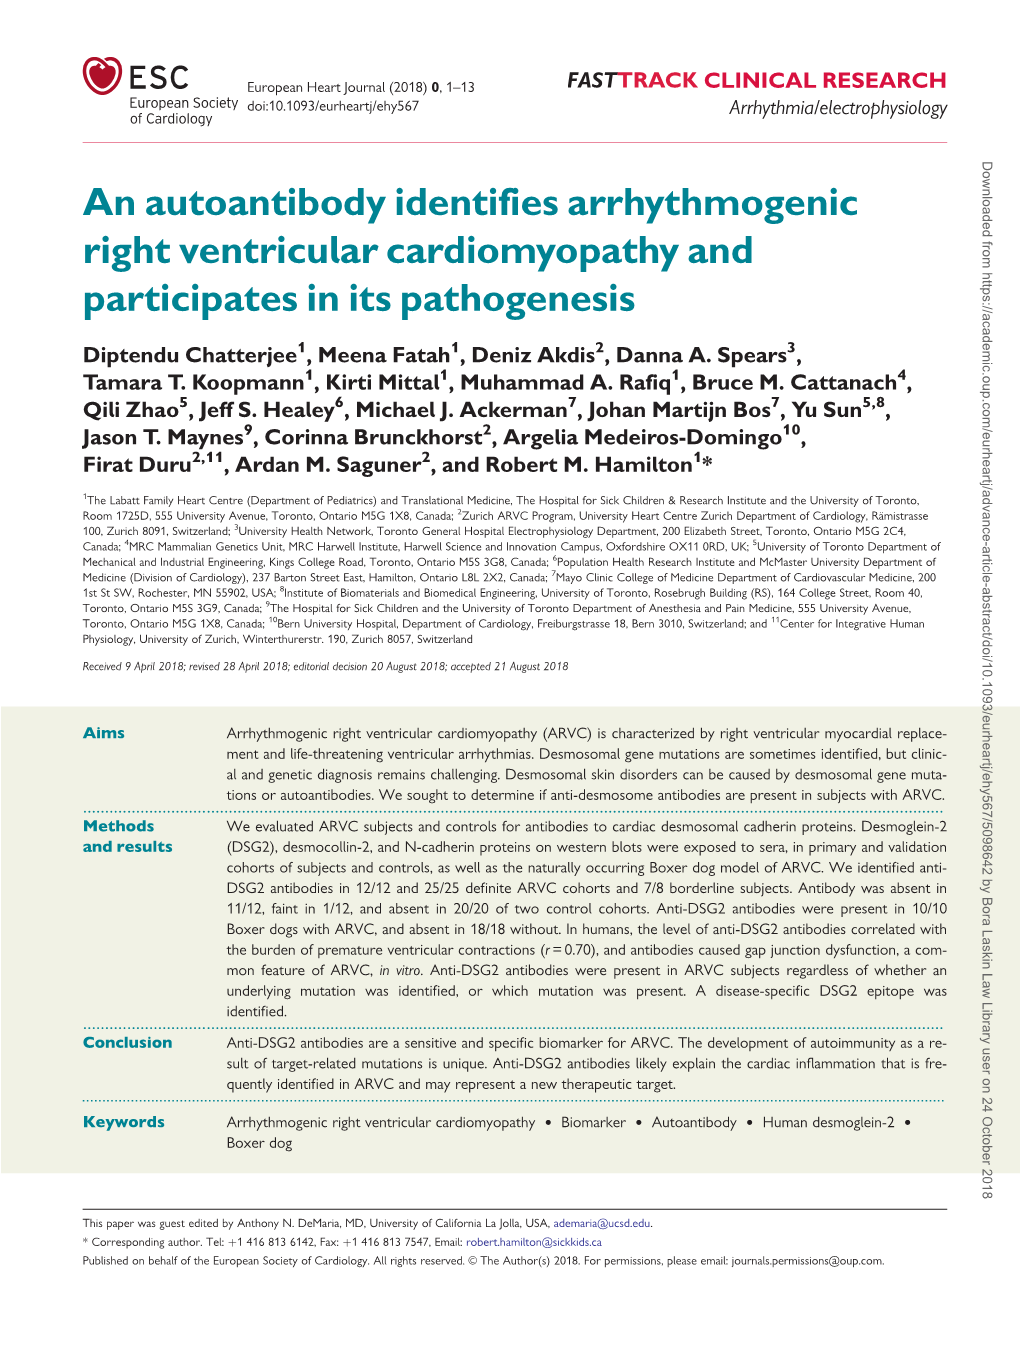 An Autoantibody Identifies Arrhythmogenic Right Ventricular Cardiomyopathy and Participates in Its Pathogenesis